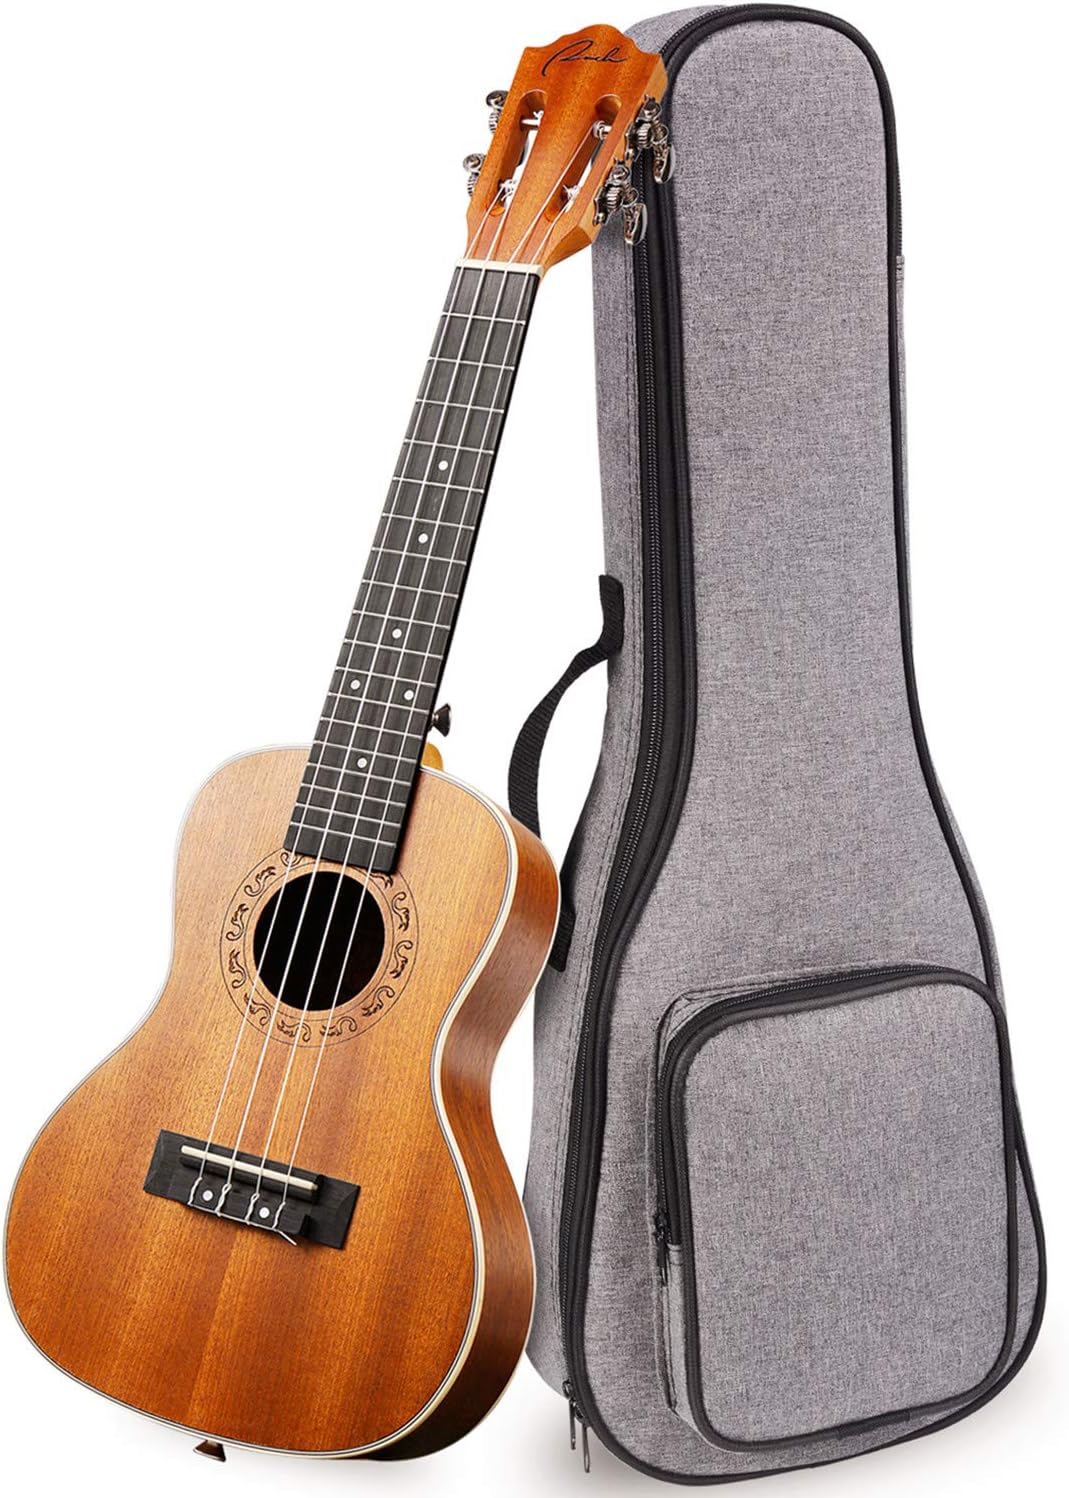 Ranch Concert Ukulele 23 inch Classical ukelele Instrument with Free Online 12 Lessons Professional Beginner Ukalalee Starter Pack Bundle Ukele Gig bag